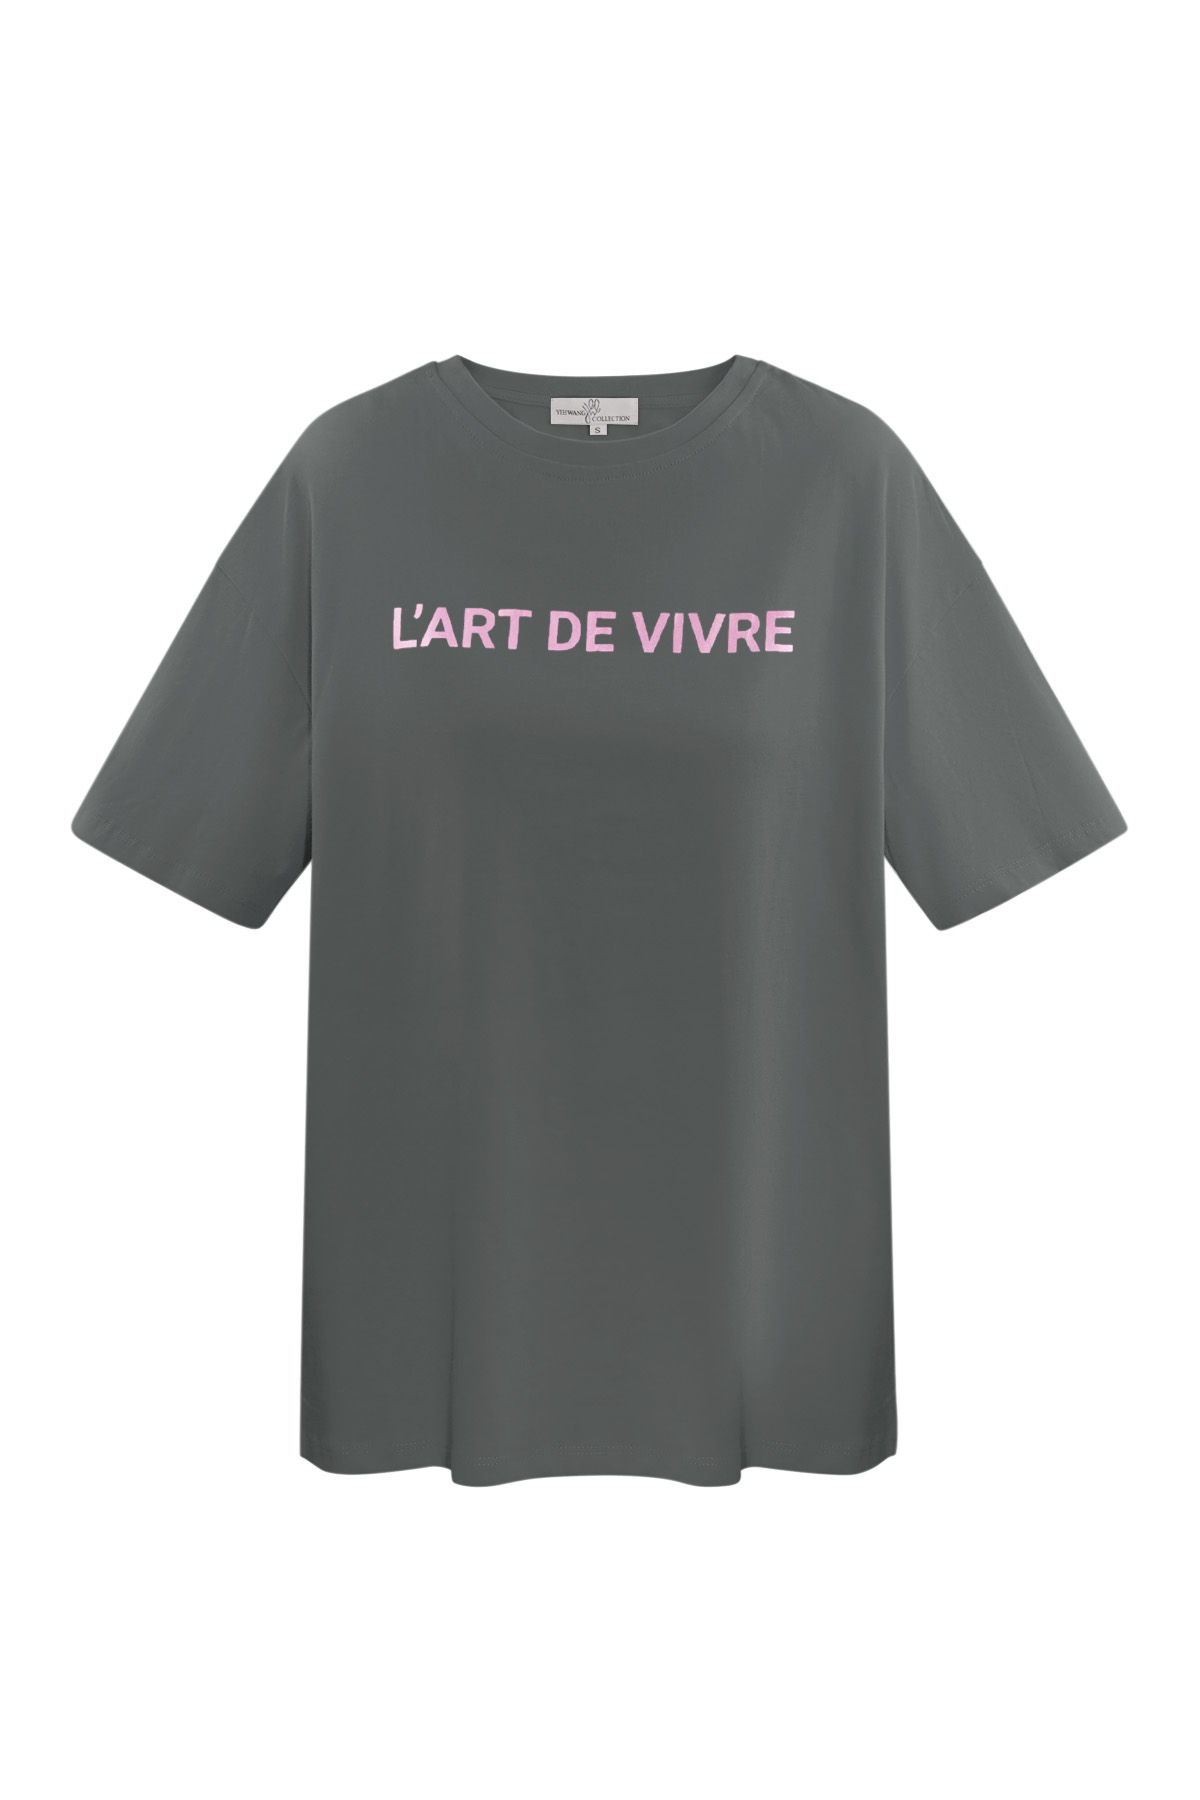 T-shirt l'art de vivre - gray pink